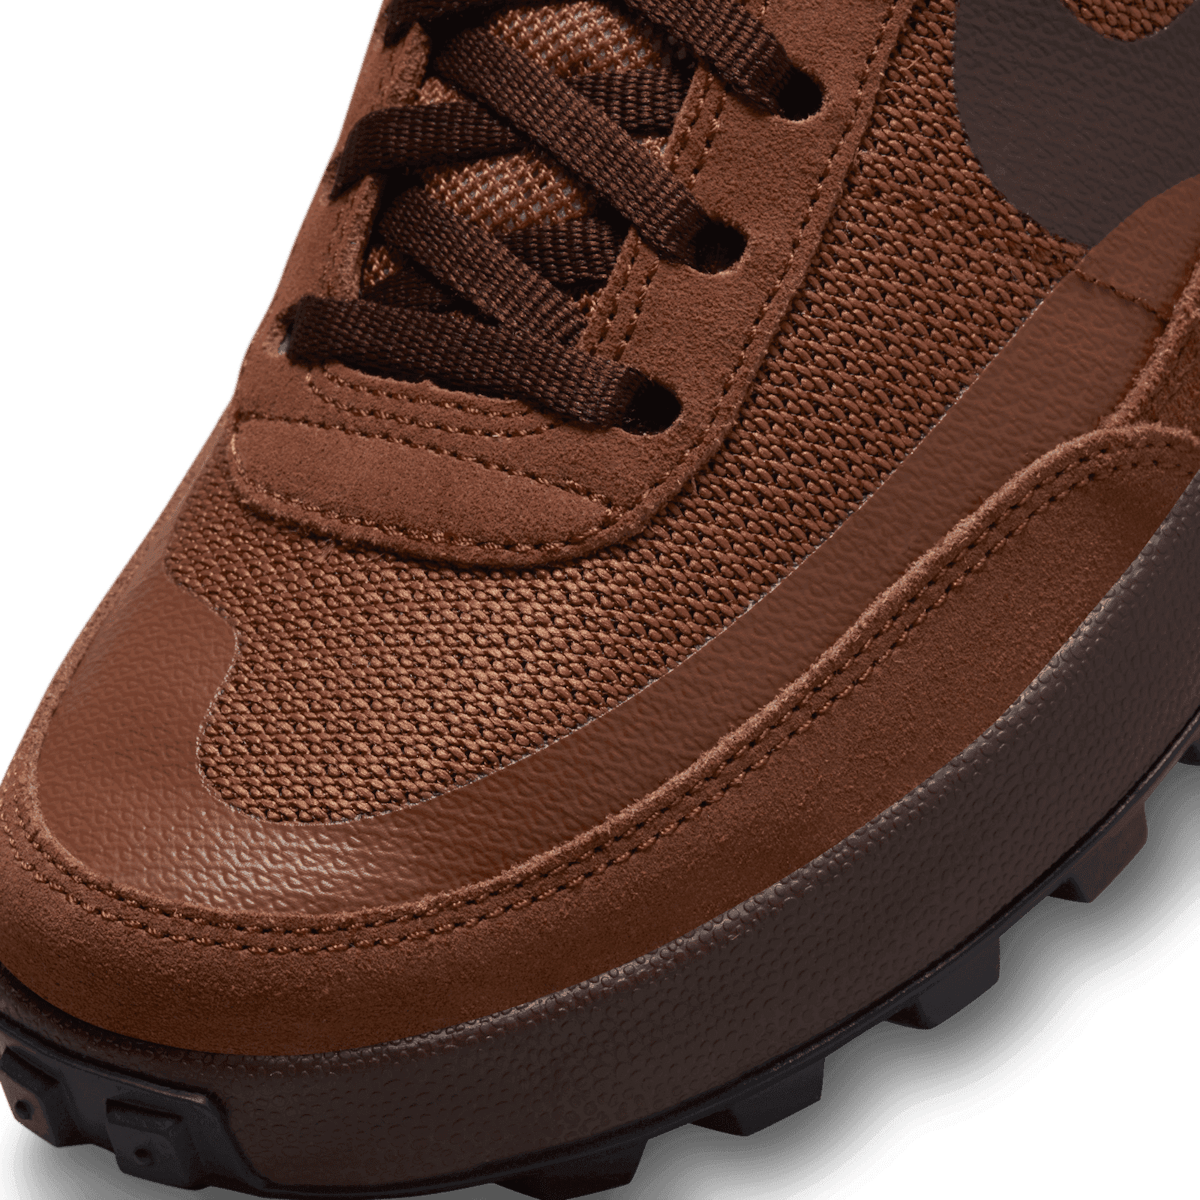 NikeCraft General Purpose Shoe Tom Sachs Pecan Brown Angle 4